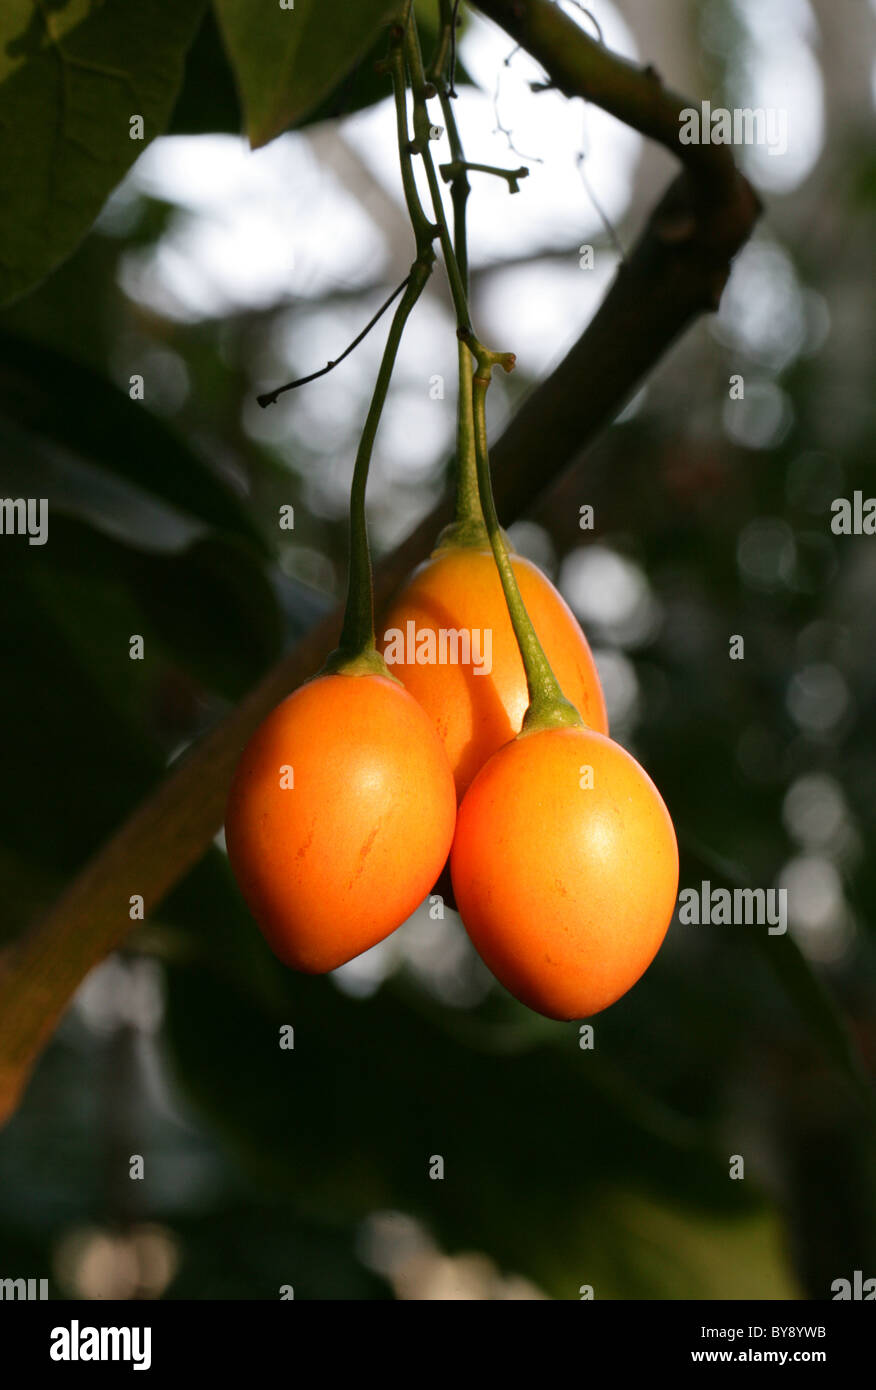 Frucht der Tamarillo oder Baum Tomate, Solanum Betaceum (ehemals Cyphomandra Betacea), Solanaceae, Anden, Südamerika. Stockfoto